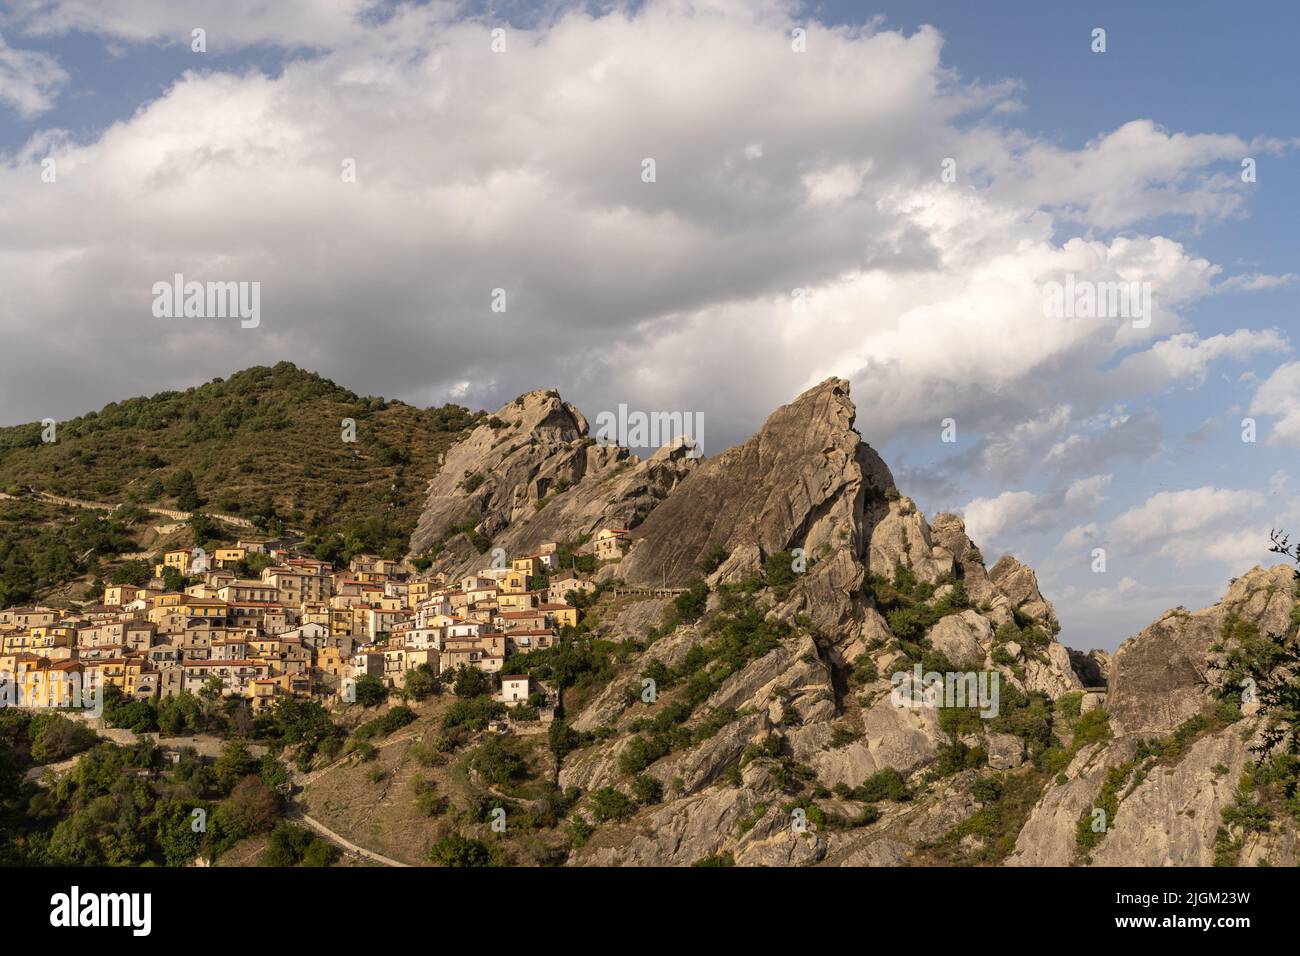 The beautiful mountain village of Castelmezzano in the province of Potenza Stock Photo